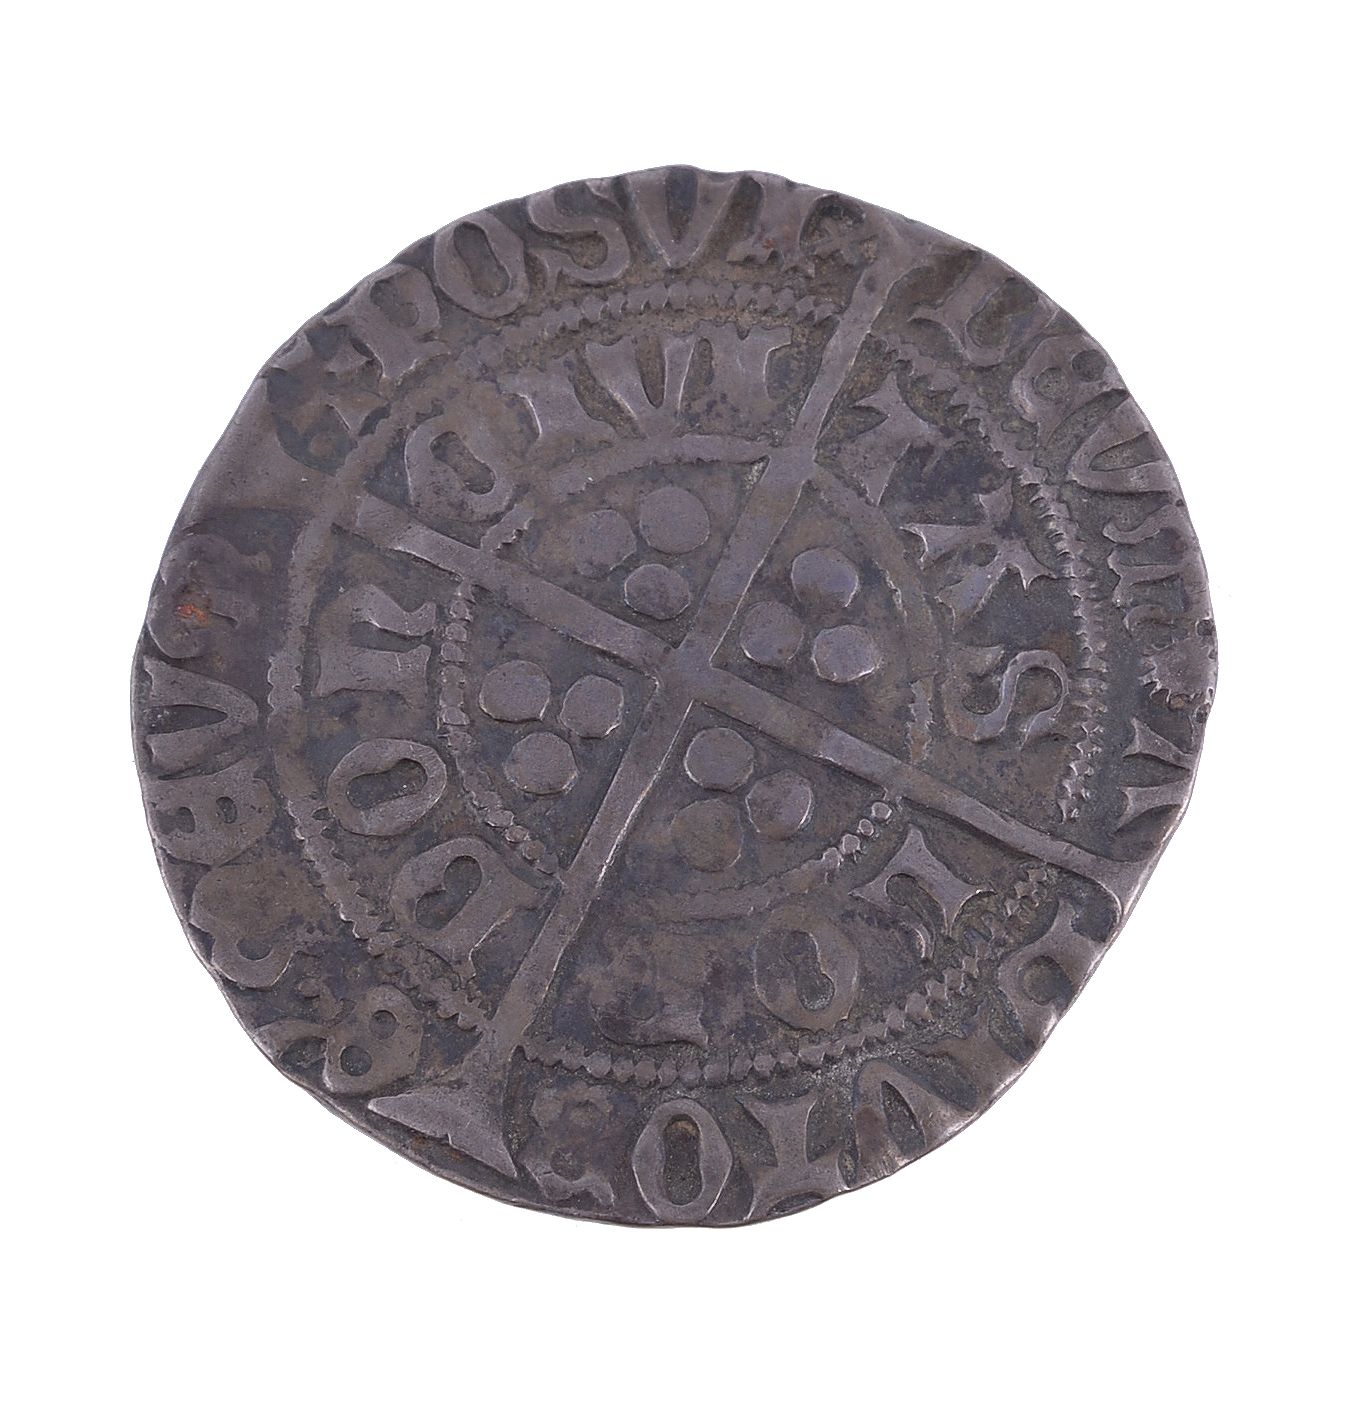 Edward IV, second reign (1471-1483), Groat, London, i.m. pierced cross (S. 2098). Good fine